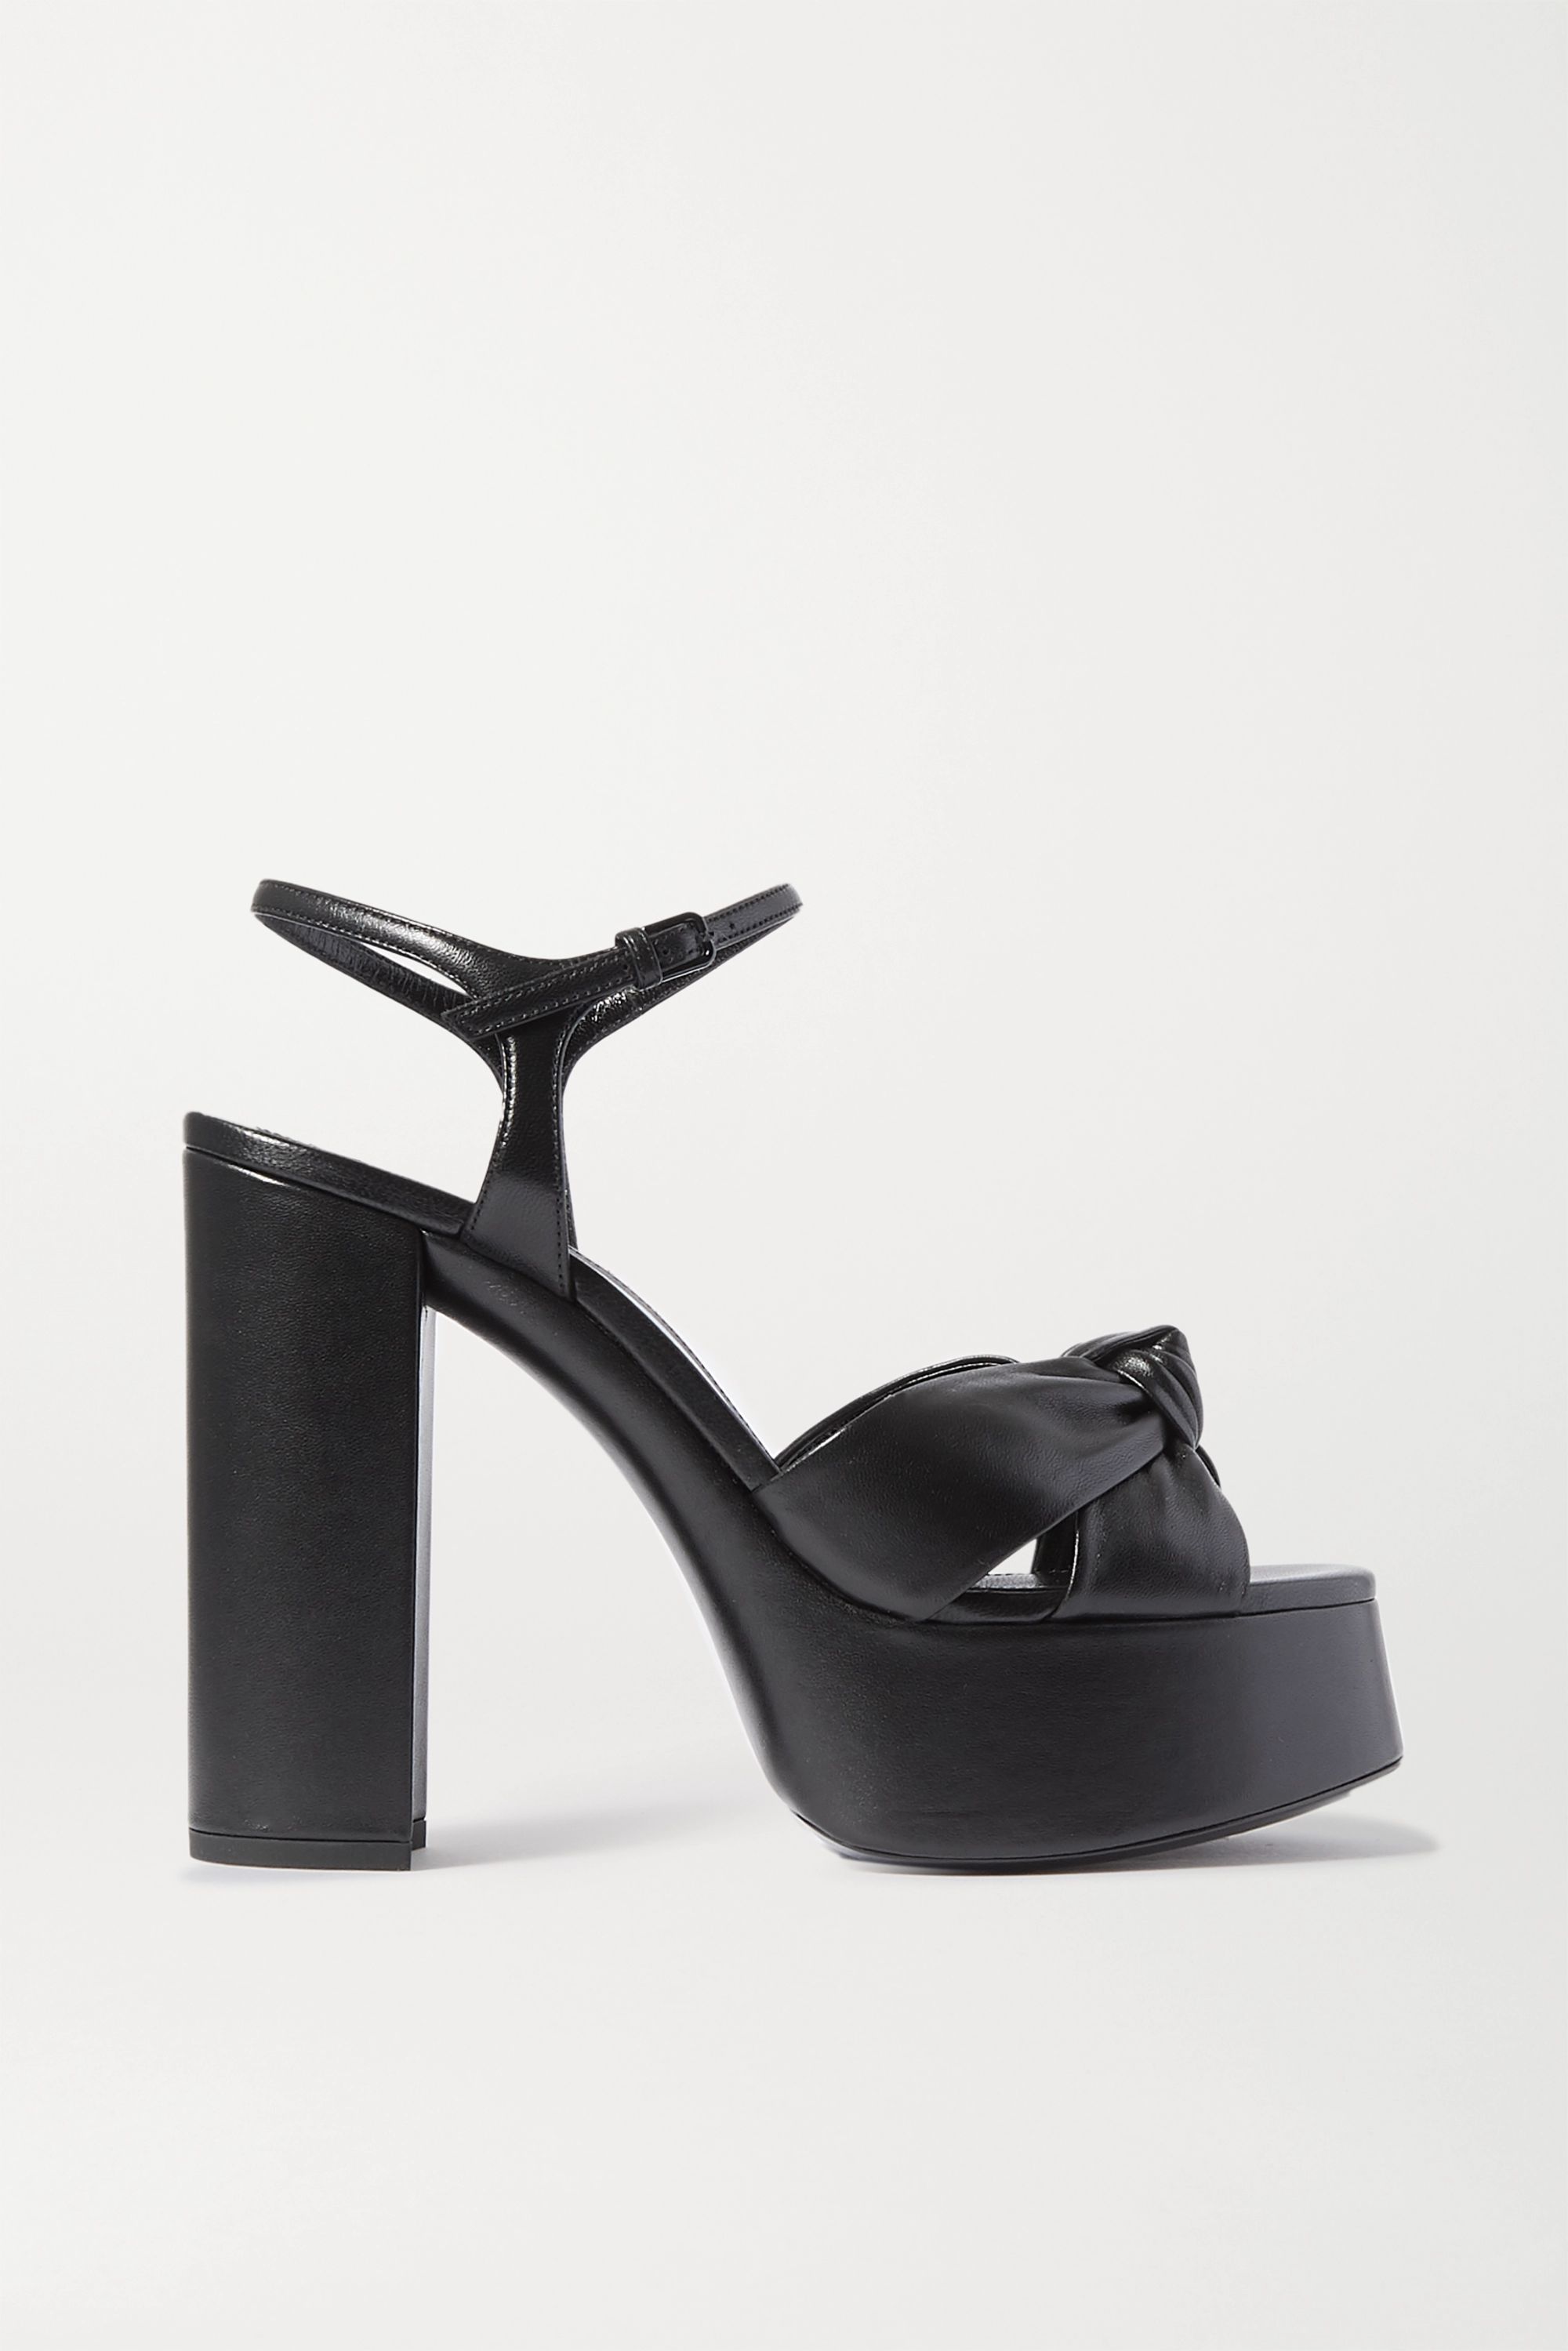 leather platform high heels